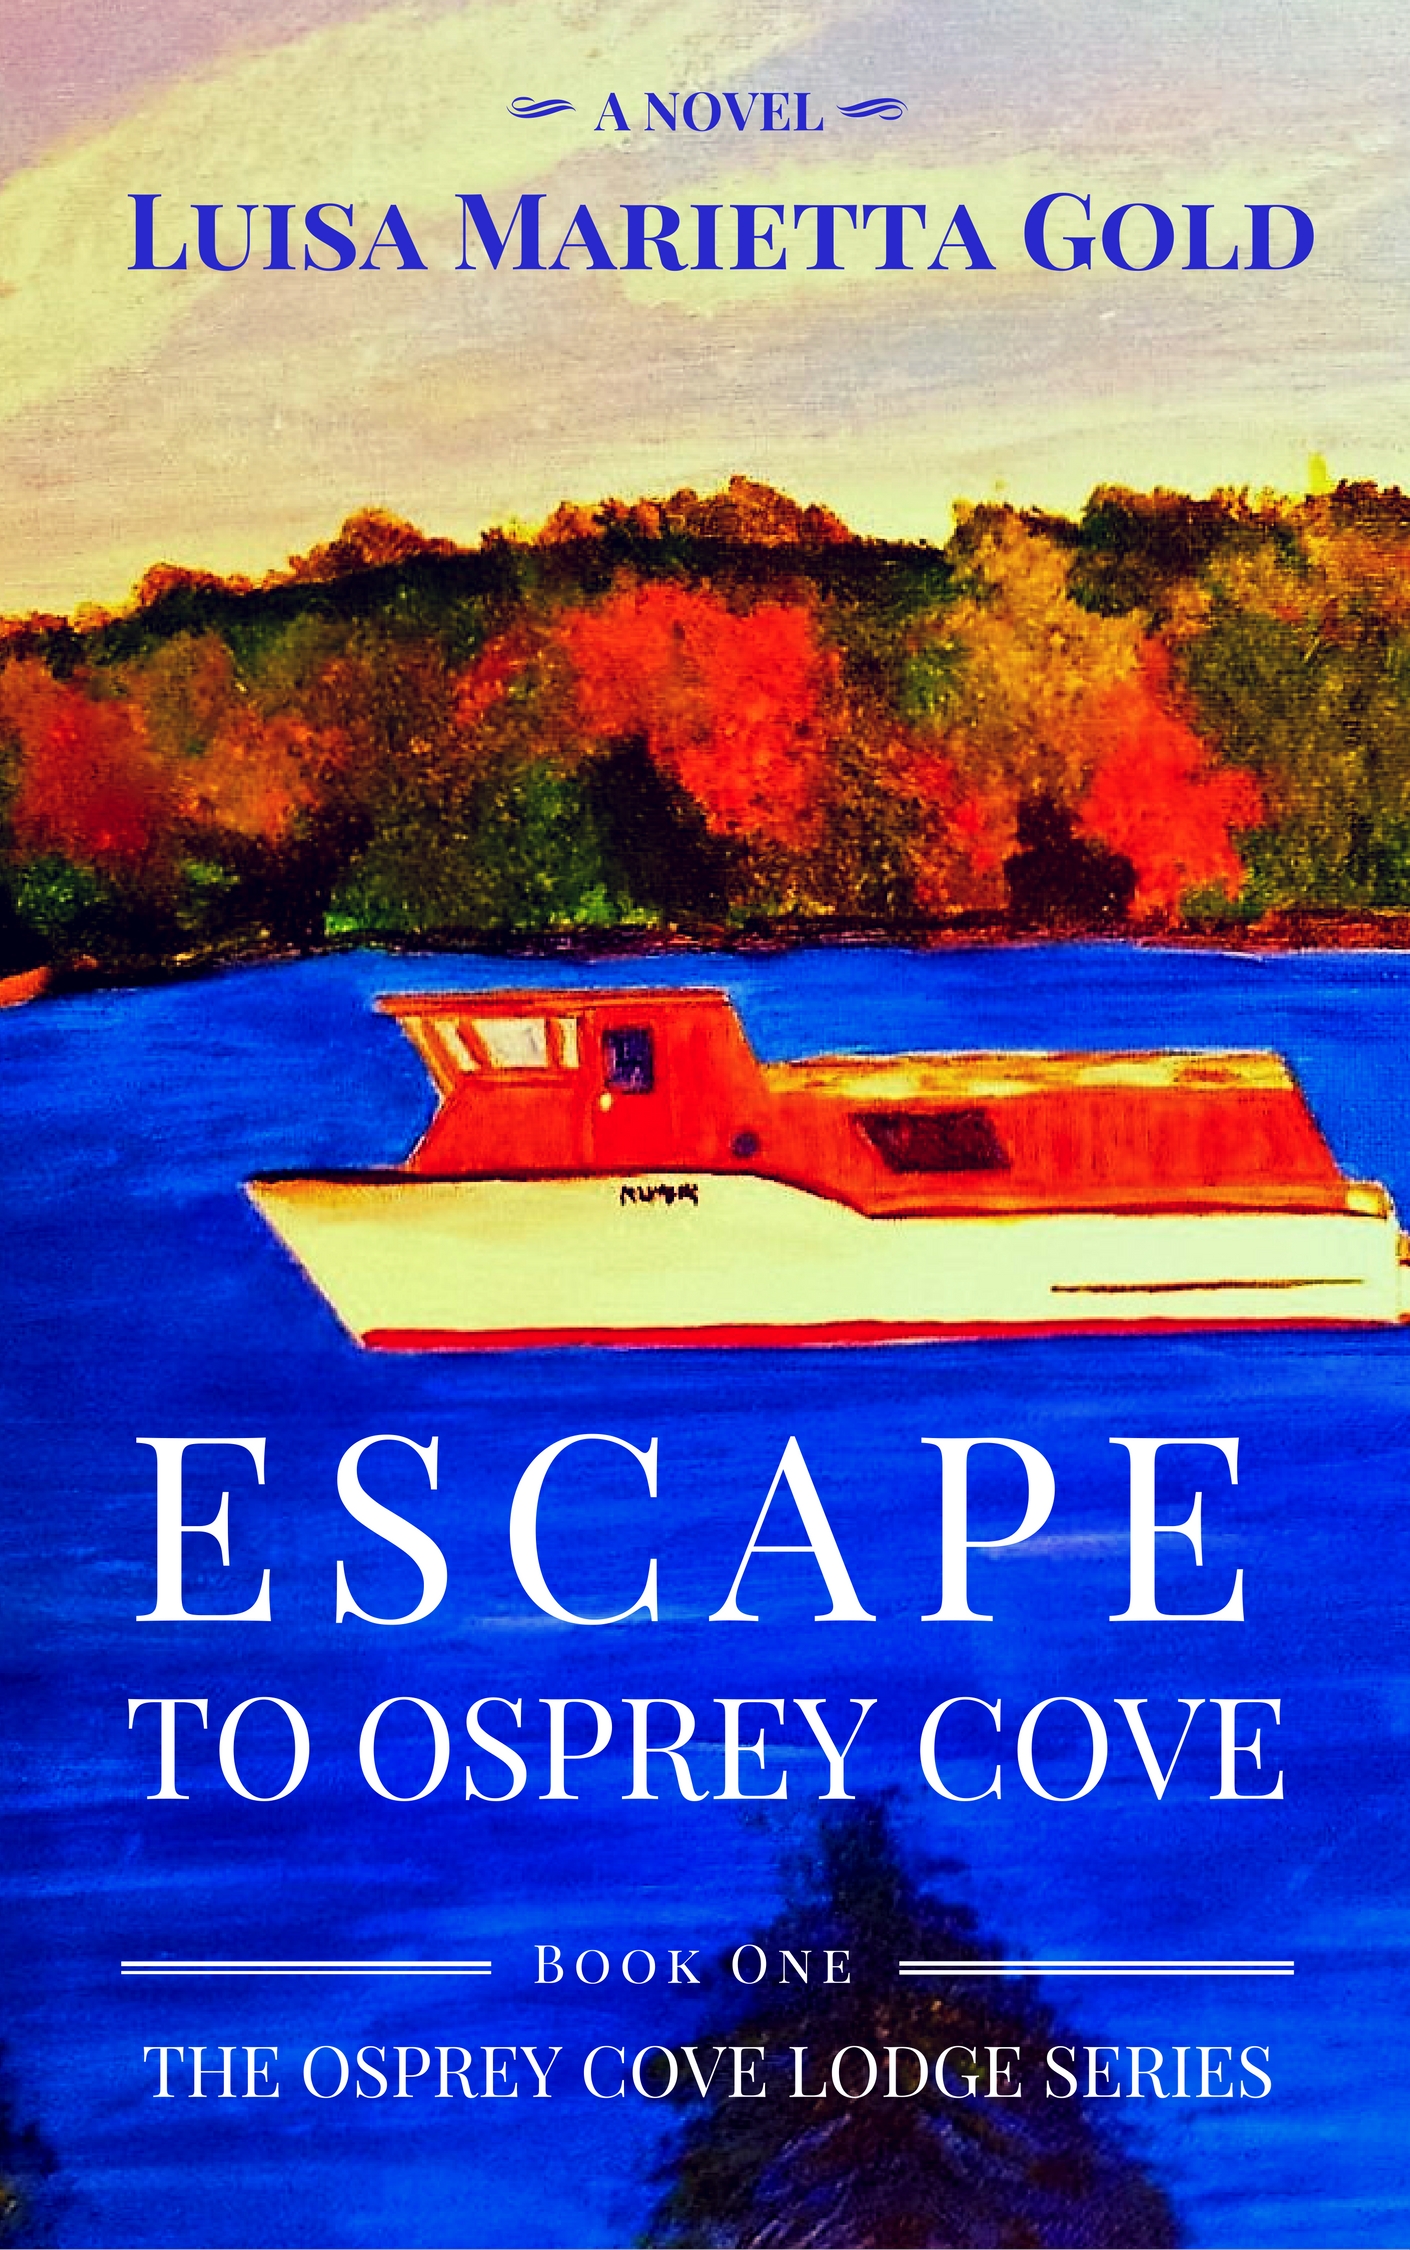 FREE: Esape to Osprey Cove by Luisa Marietta Gold